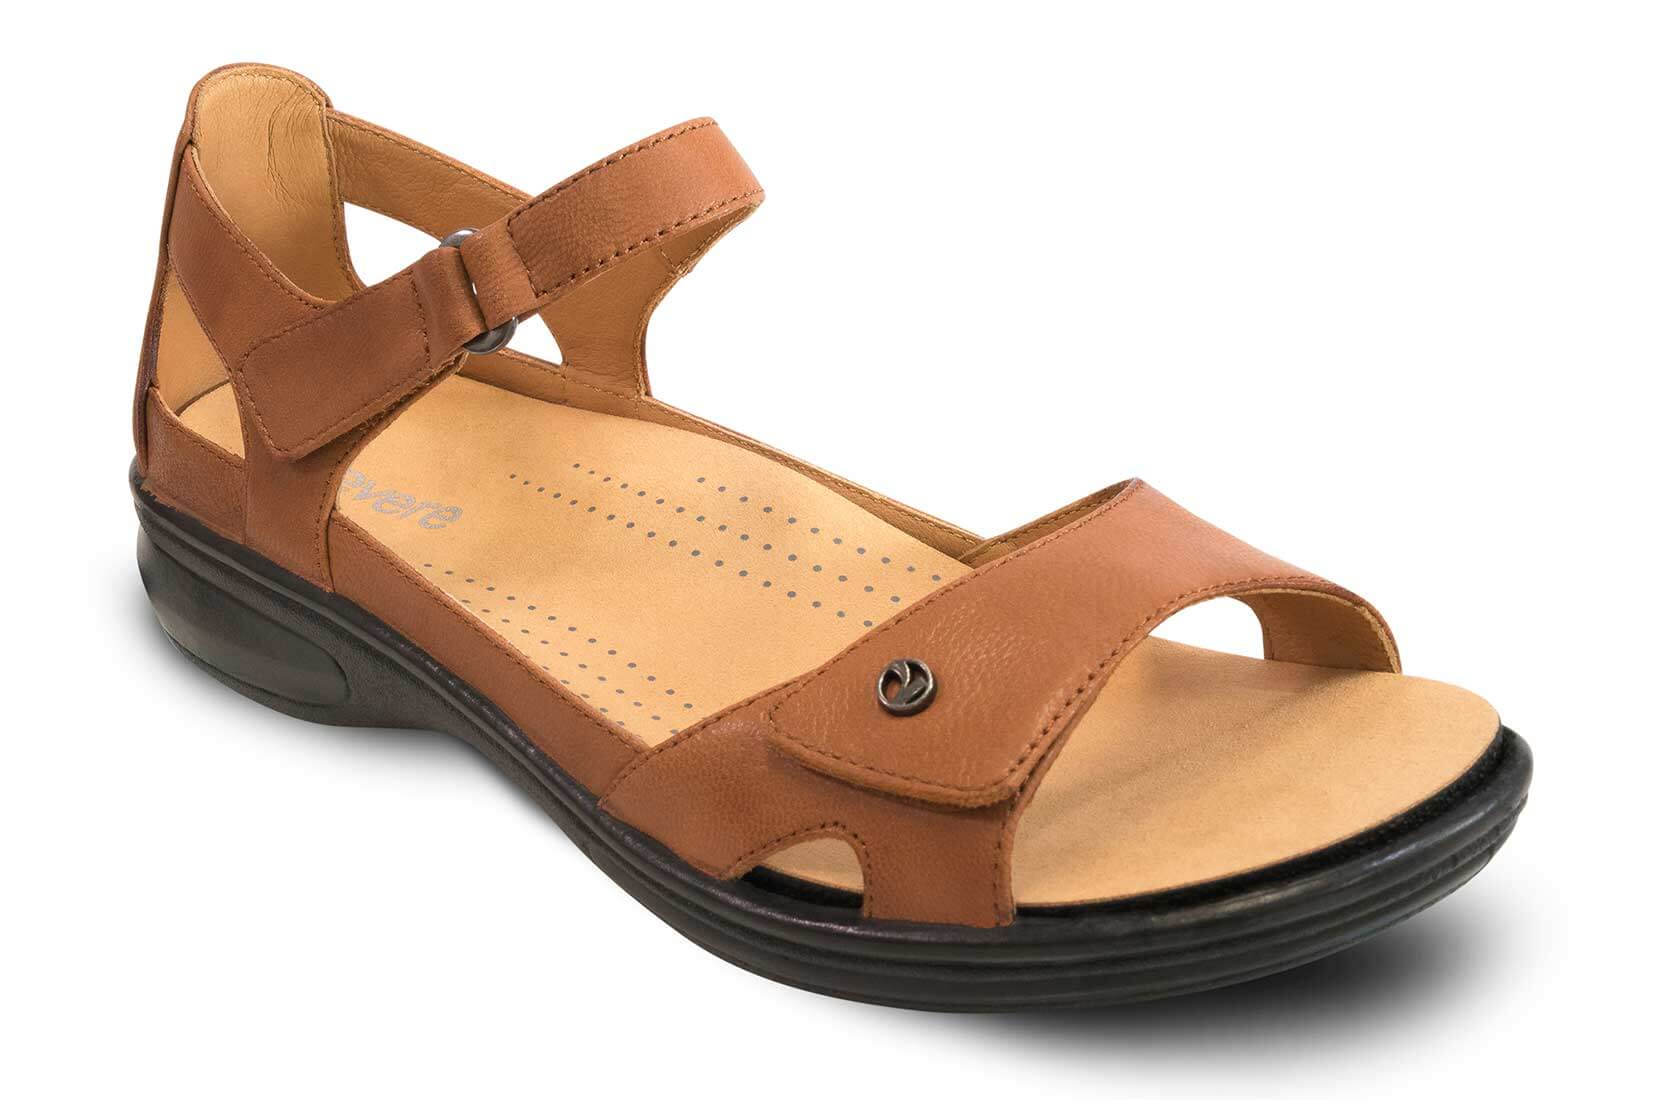 Revere Portofino Sandal - Women's Sandal - Medium - Wide - Extra Depth With Removable Foot Beds